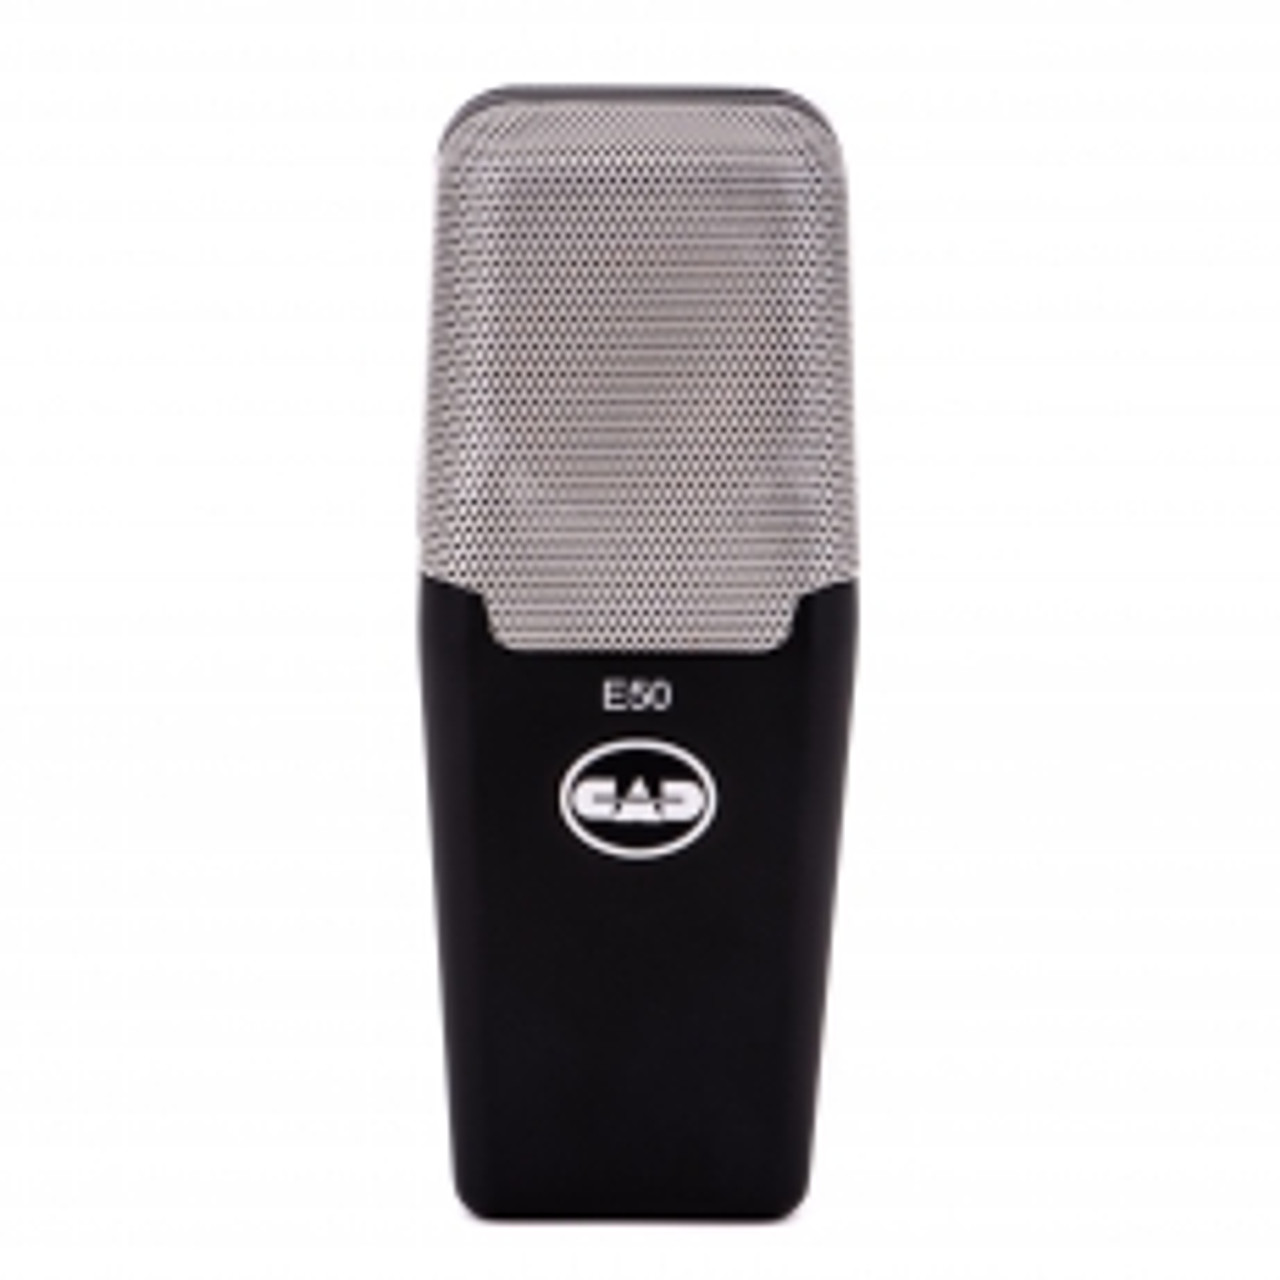 E50 Large Diaphragm SuperCardioid Condenser Microphone